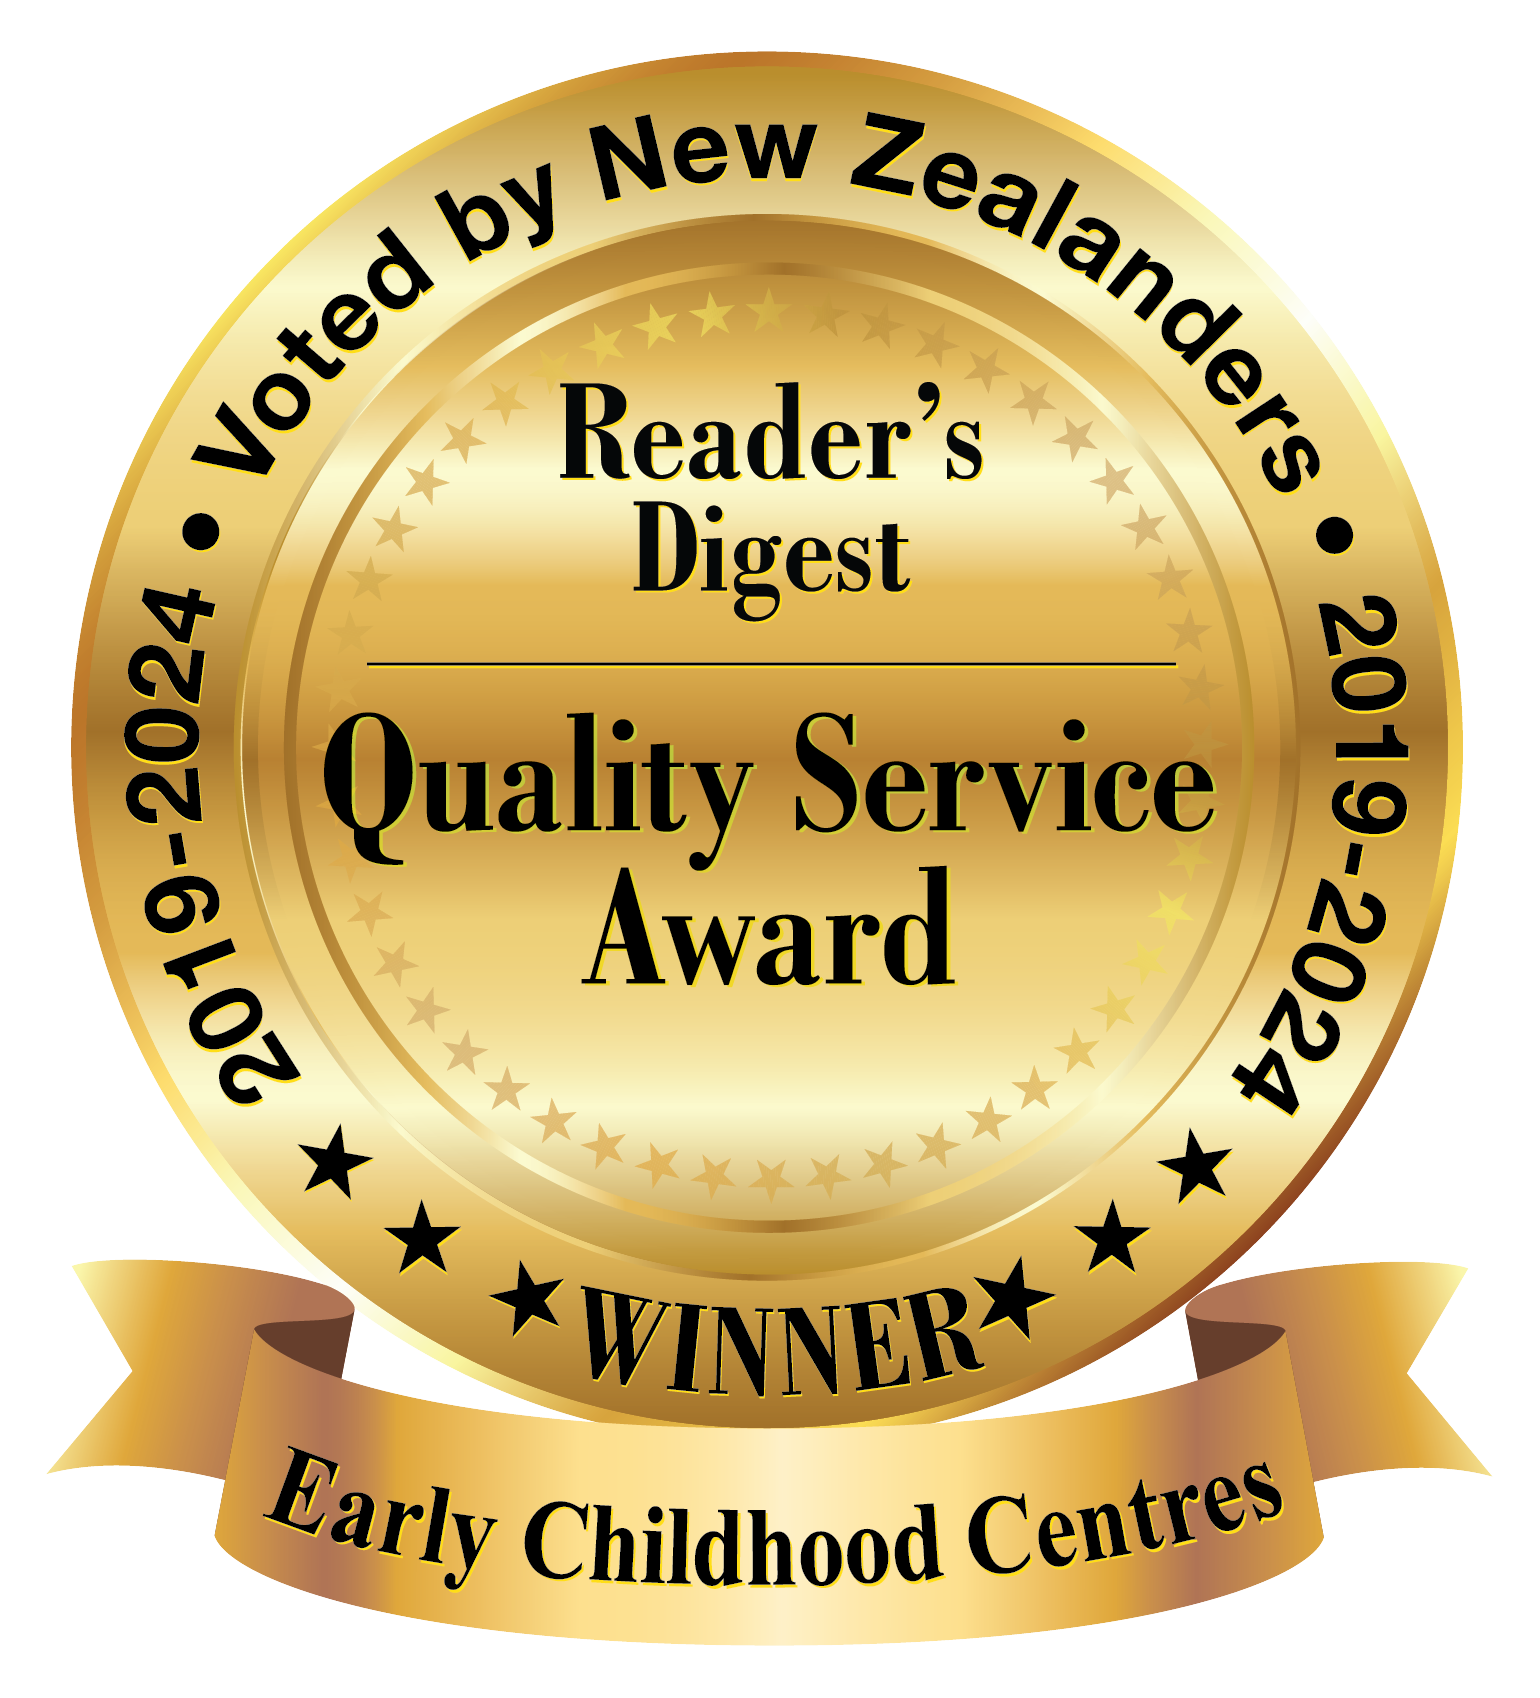 Quality Service Award